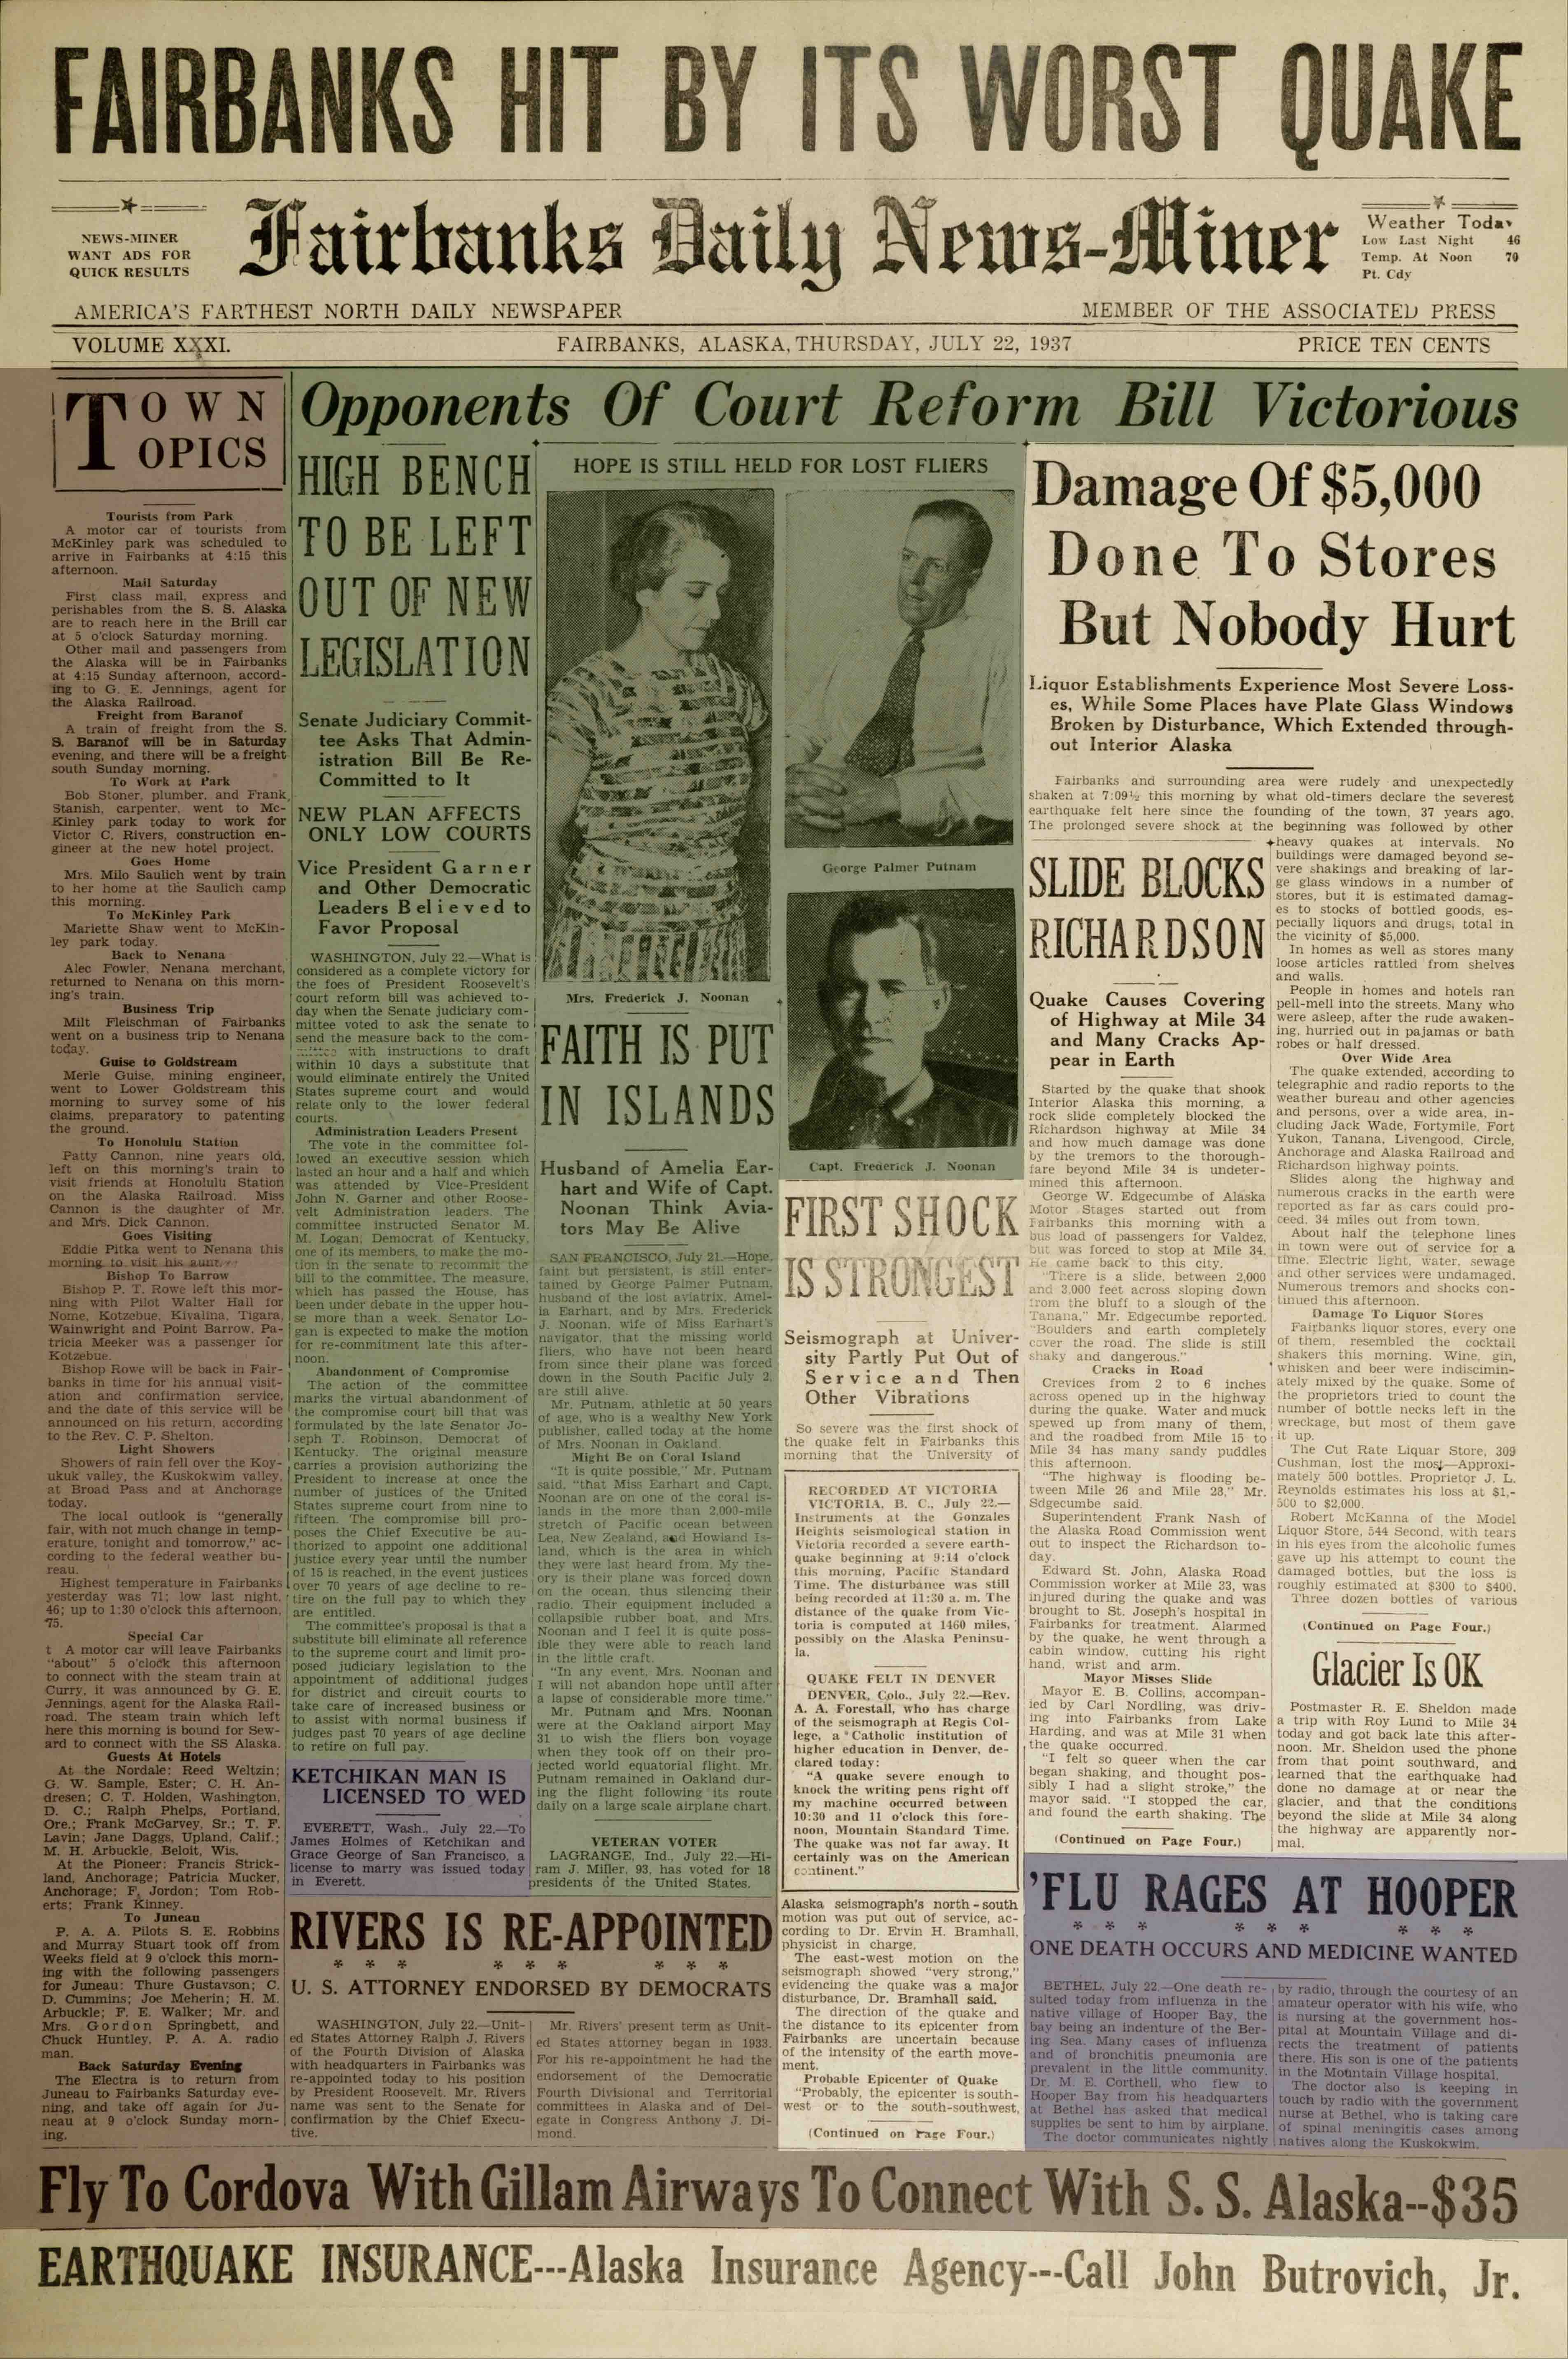 1937 July 22, Fairbanks Daily News-Miner (pg 1)